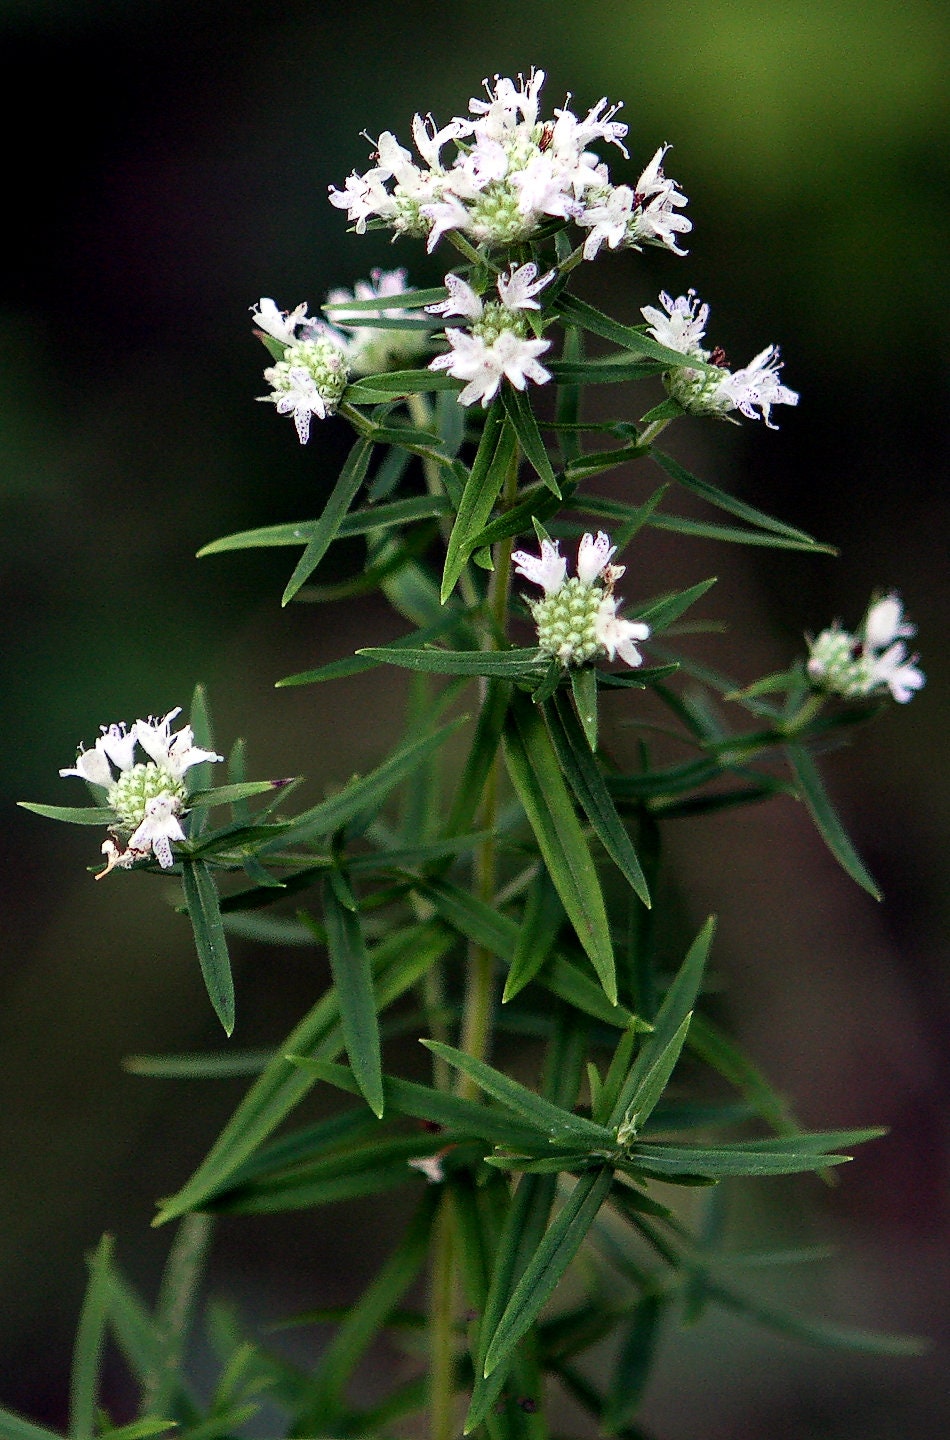 500 VIRGINIA MINT Pycnanthemum Virginianum Mountainmint Native White Flower Herb Seeds